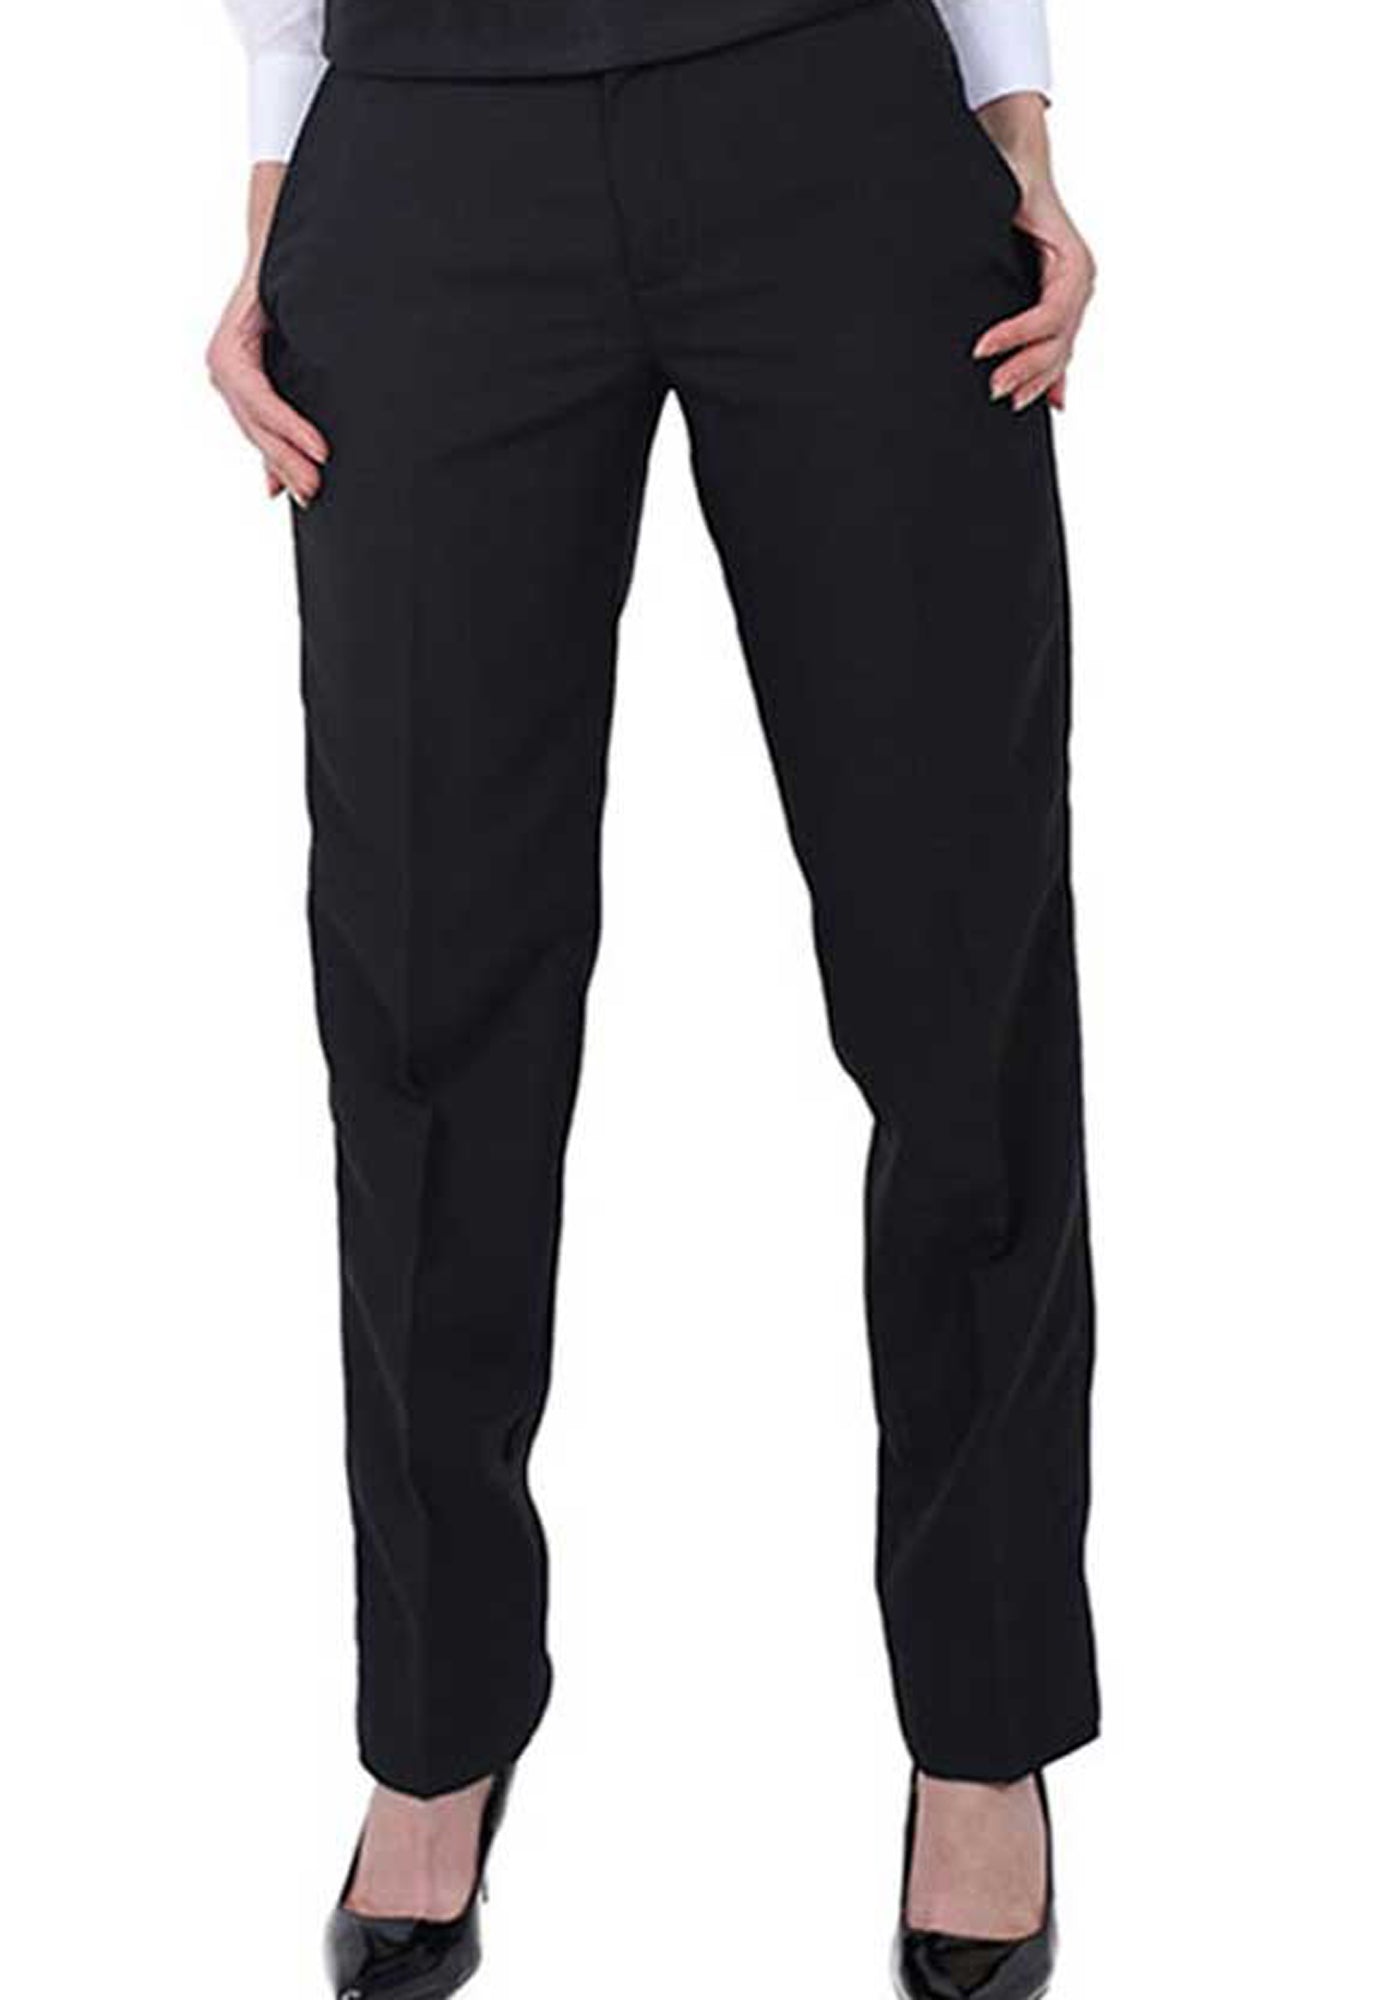 Atmosphere Women Black Dress Pants Size 2 | eBay